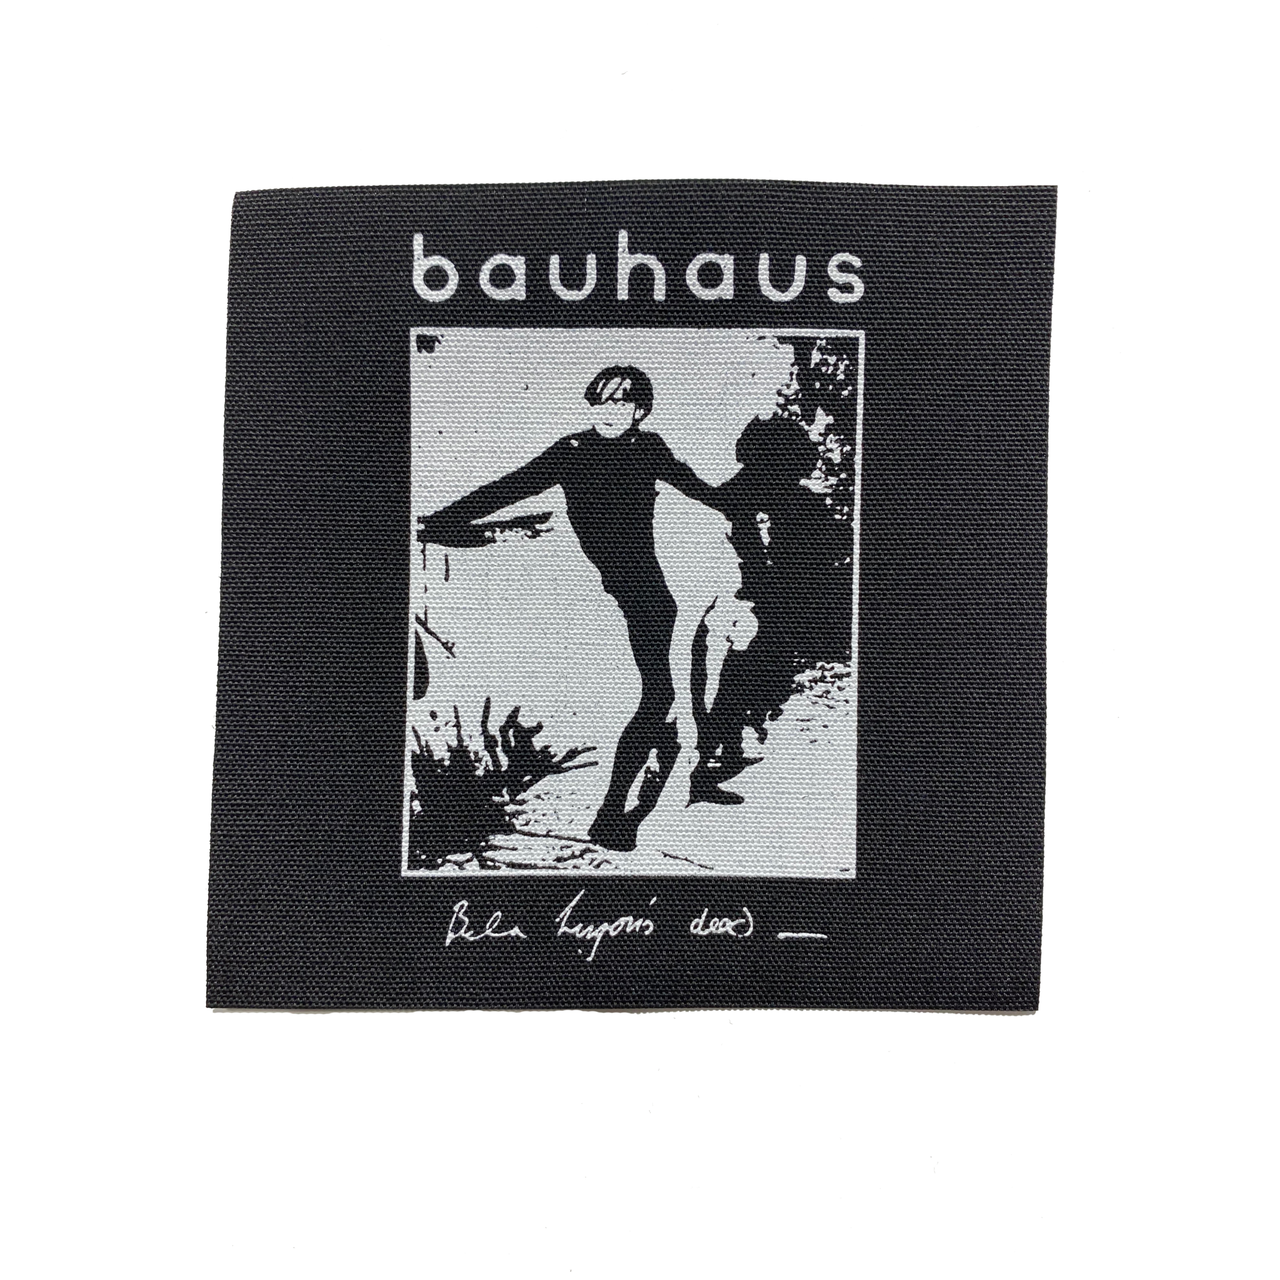 Bauhaus Bela Lugosi's Dead Cloth Patch